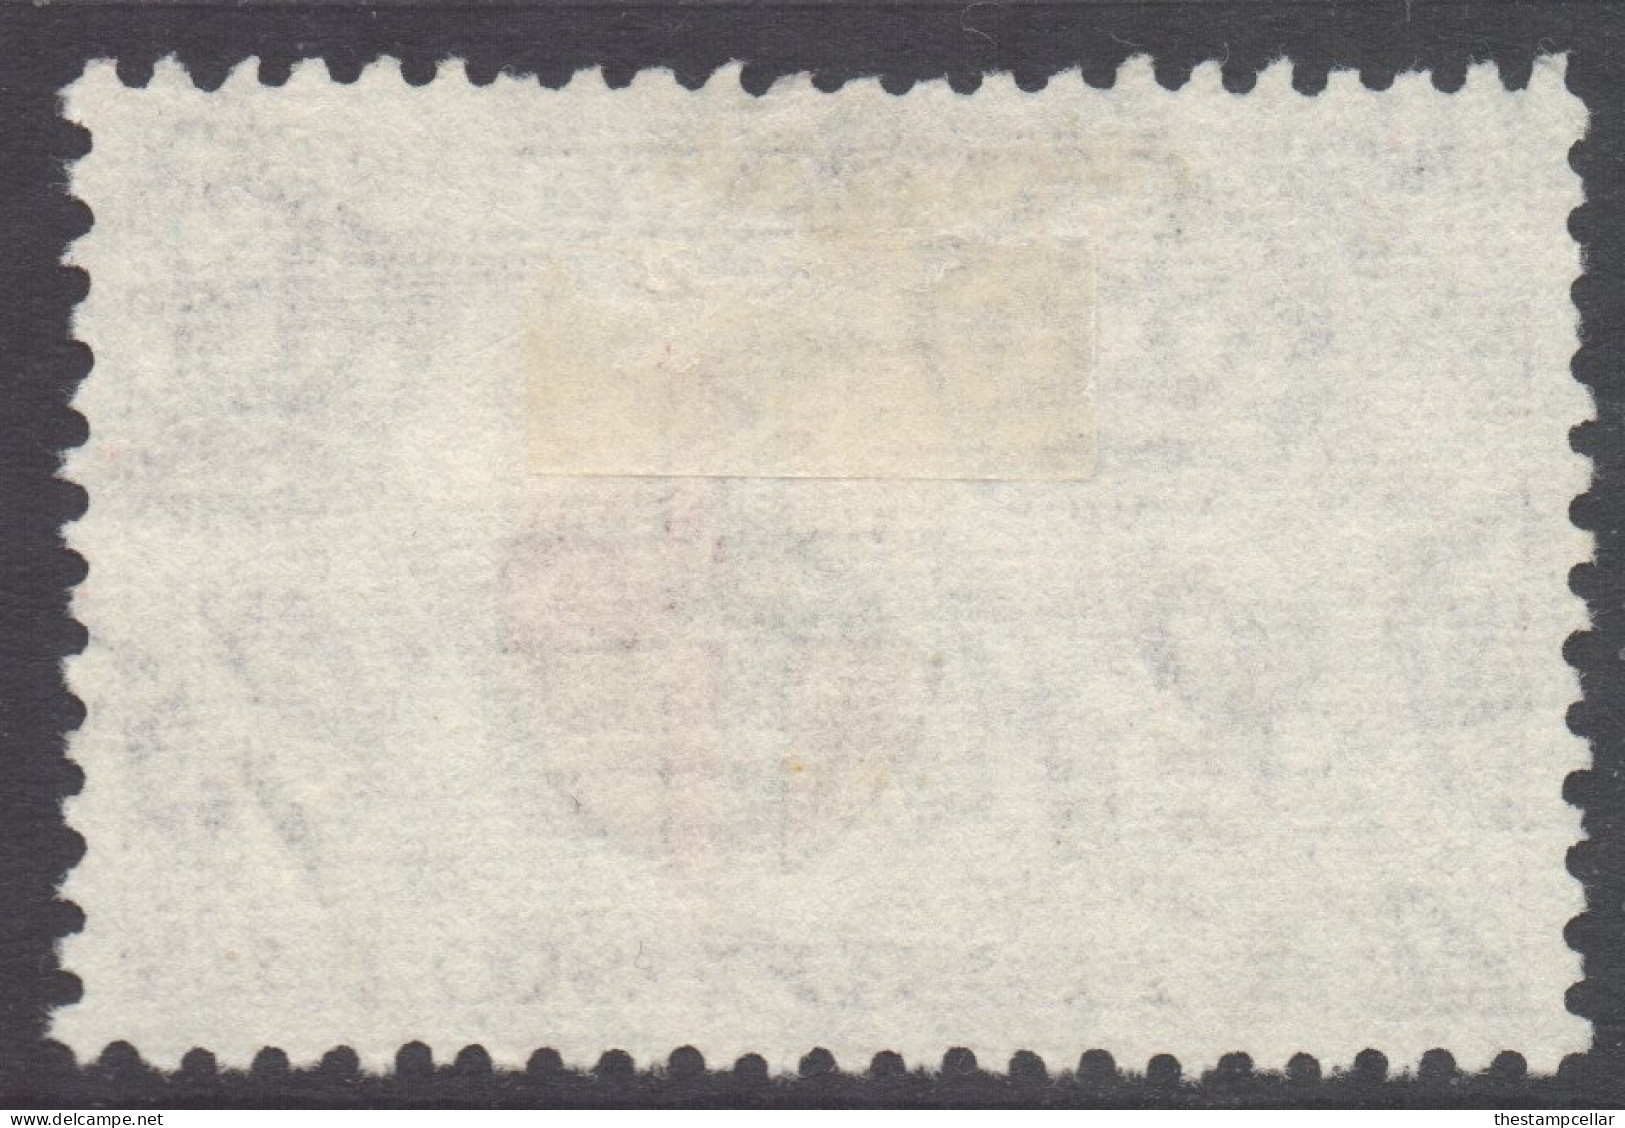 Sarawak Scott 211 - SG202, 1955 Elizabeth II $5 Used - Sarawak (...-1963)